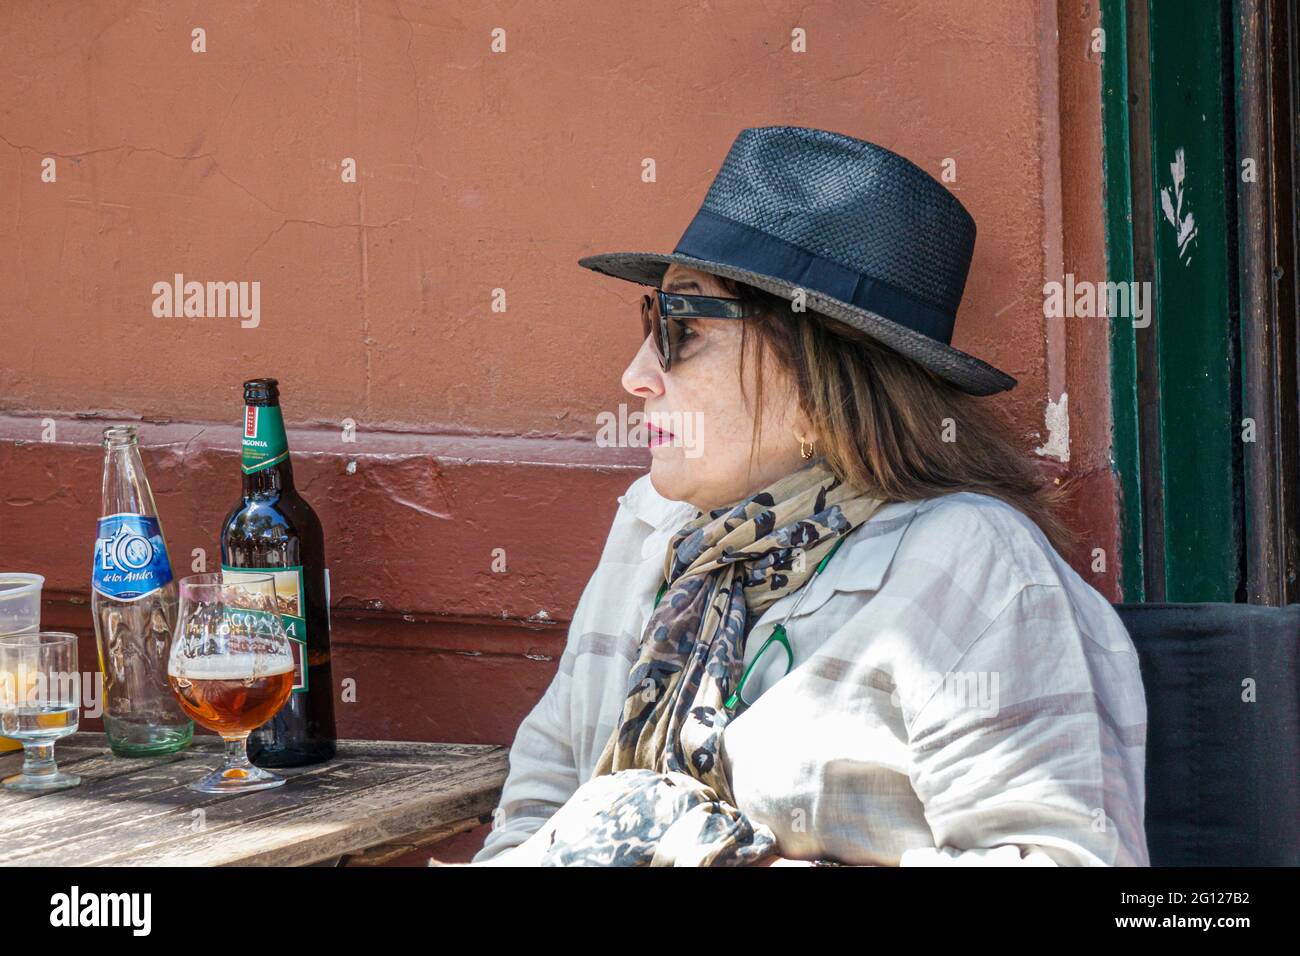 Argentina Buenos Aires San Telmo Plaza Dorrego mesa de café al aire libre mujer hispana con sombrero fedora gafas de sol beber cerveza botella de vidrio Foto de stock